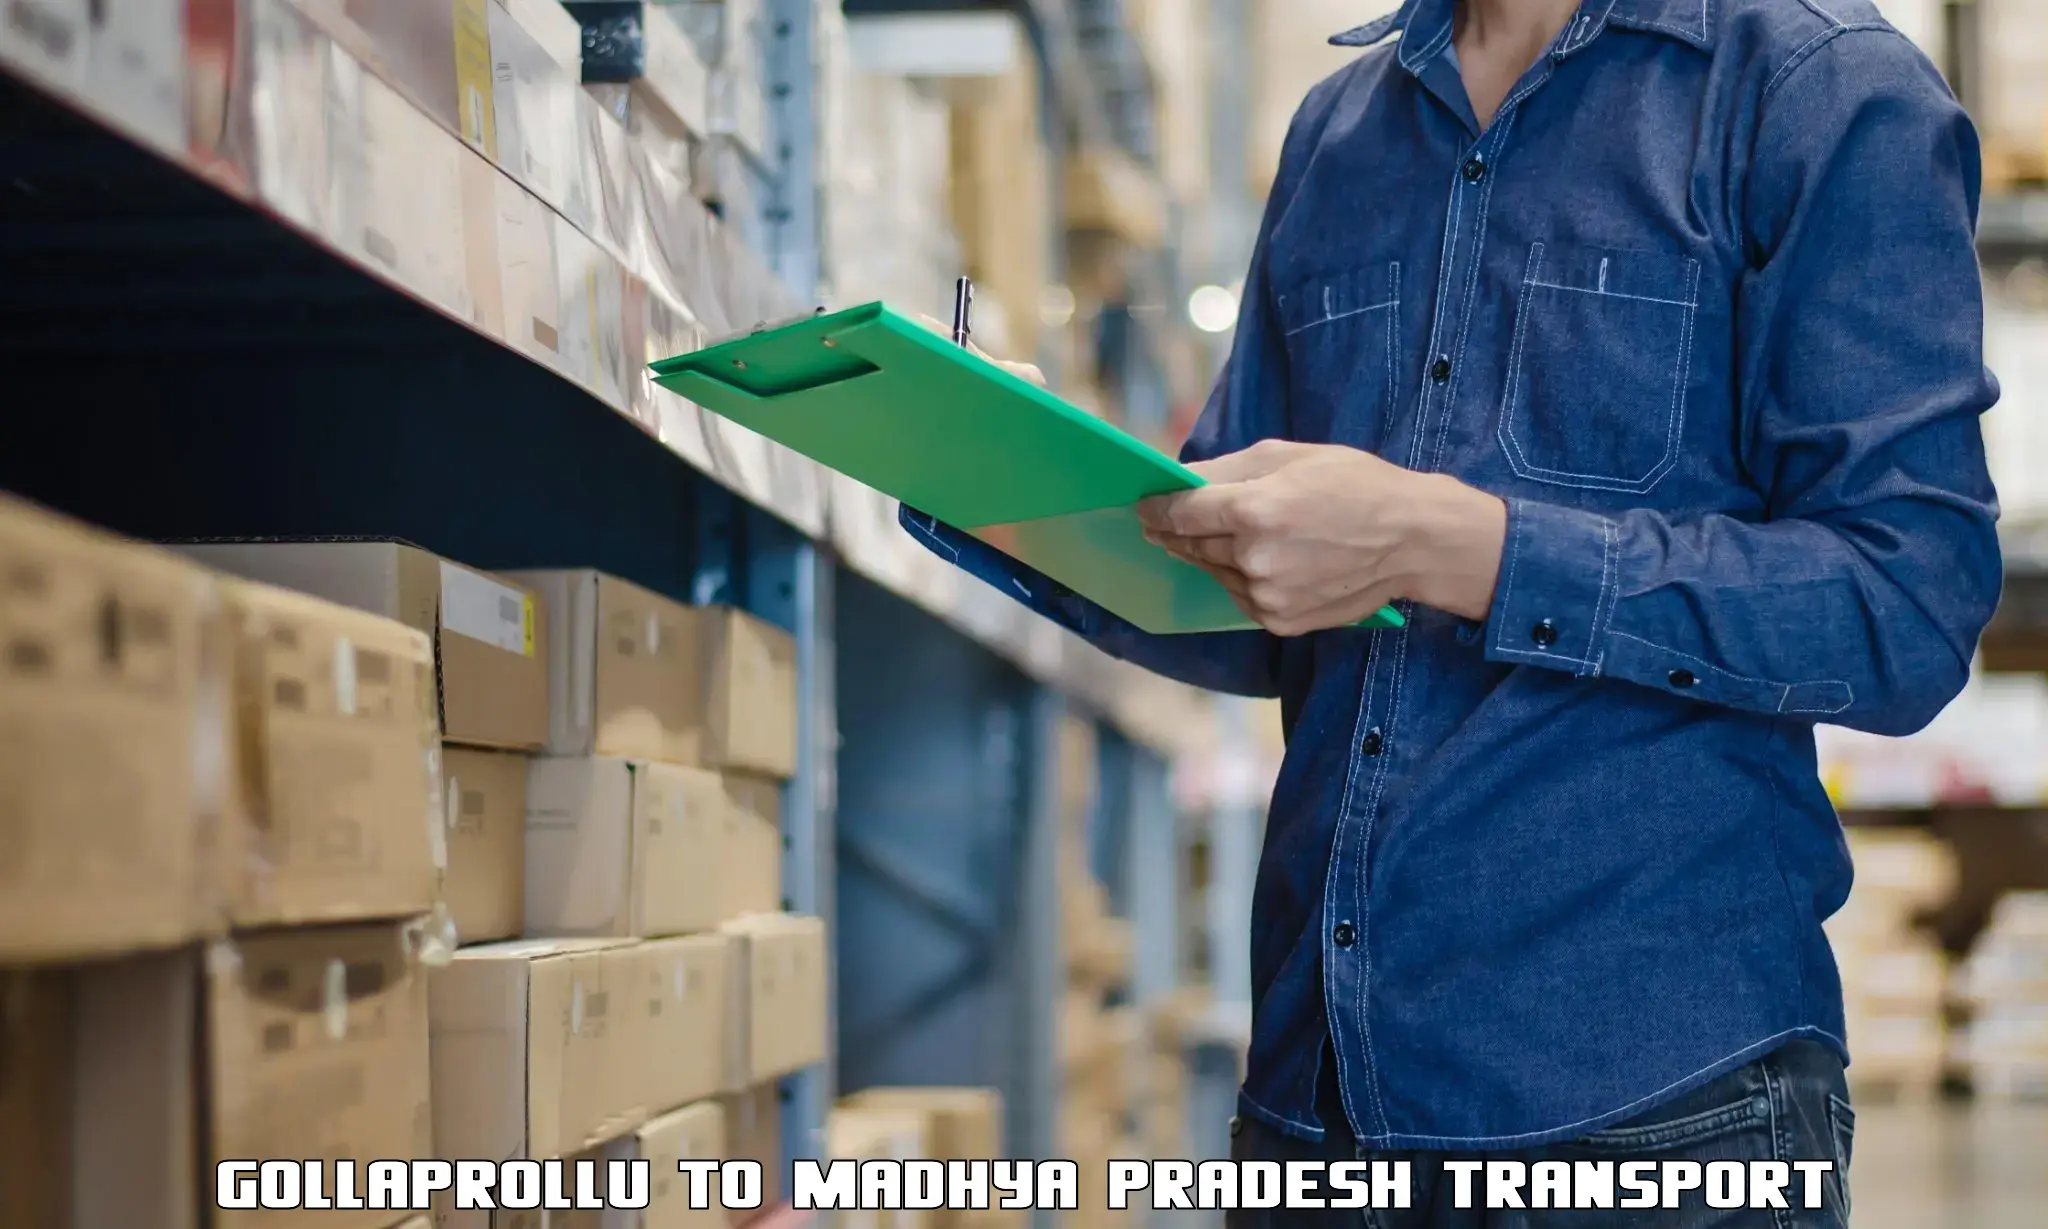 Container transportation services Gollaprollu to Vidisha